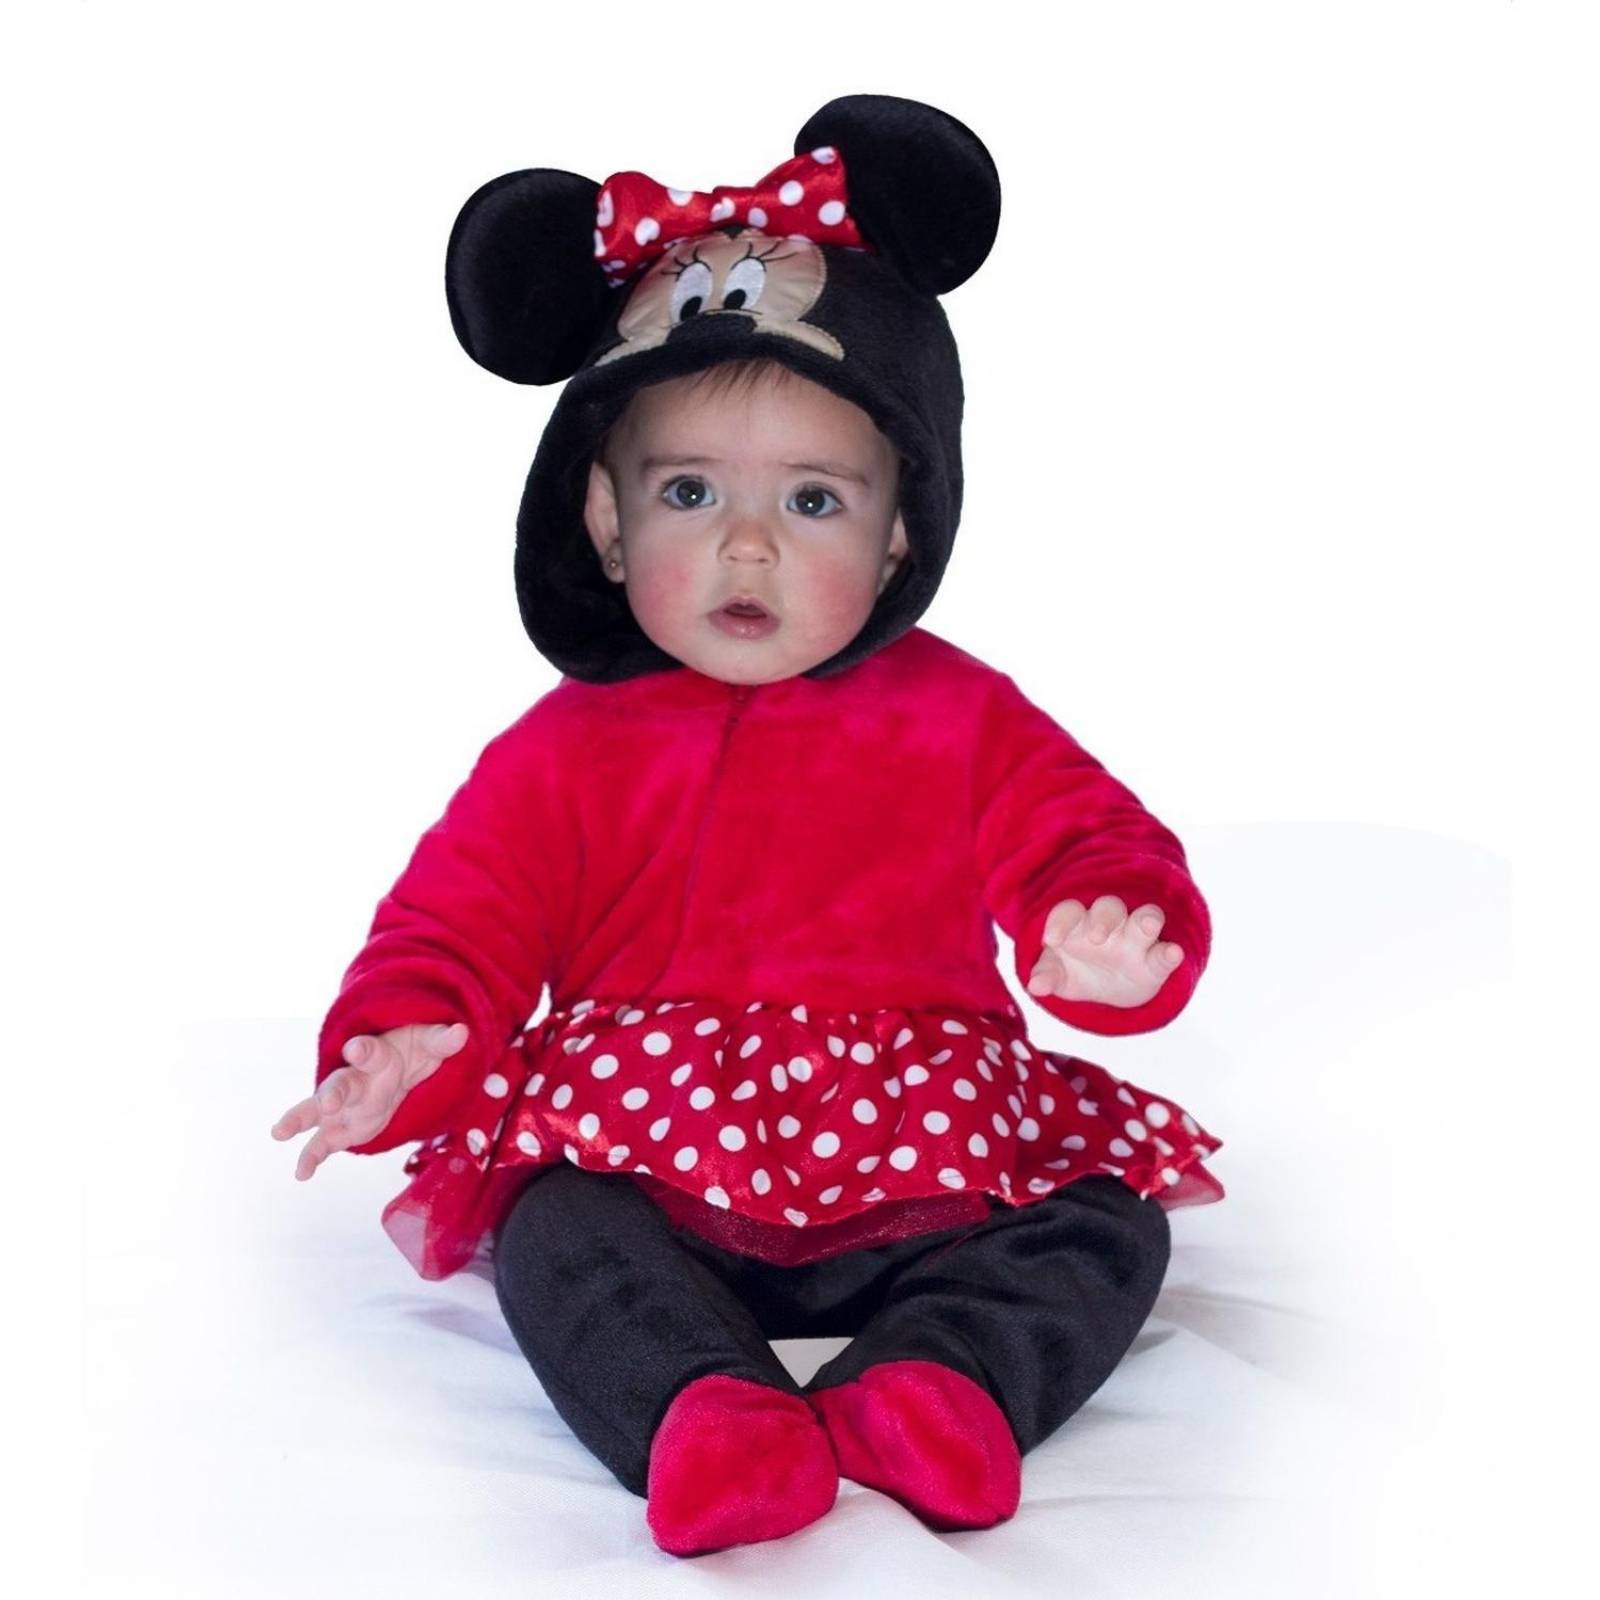 Disfraz tipo body para bebé Pato Donald, Disney Store